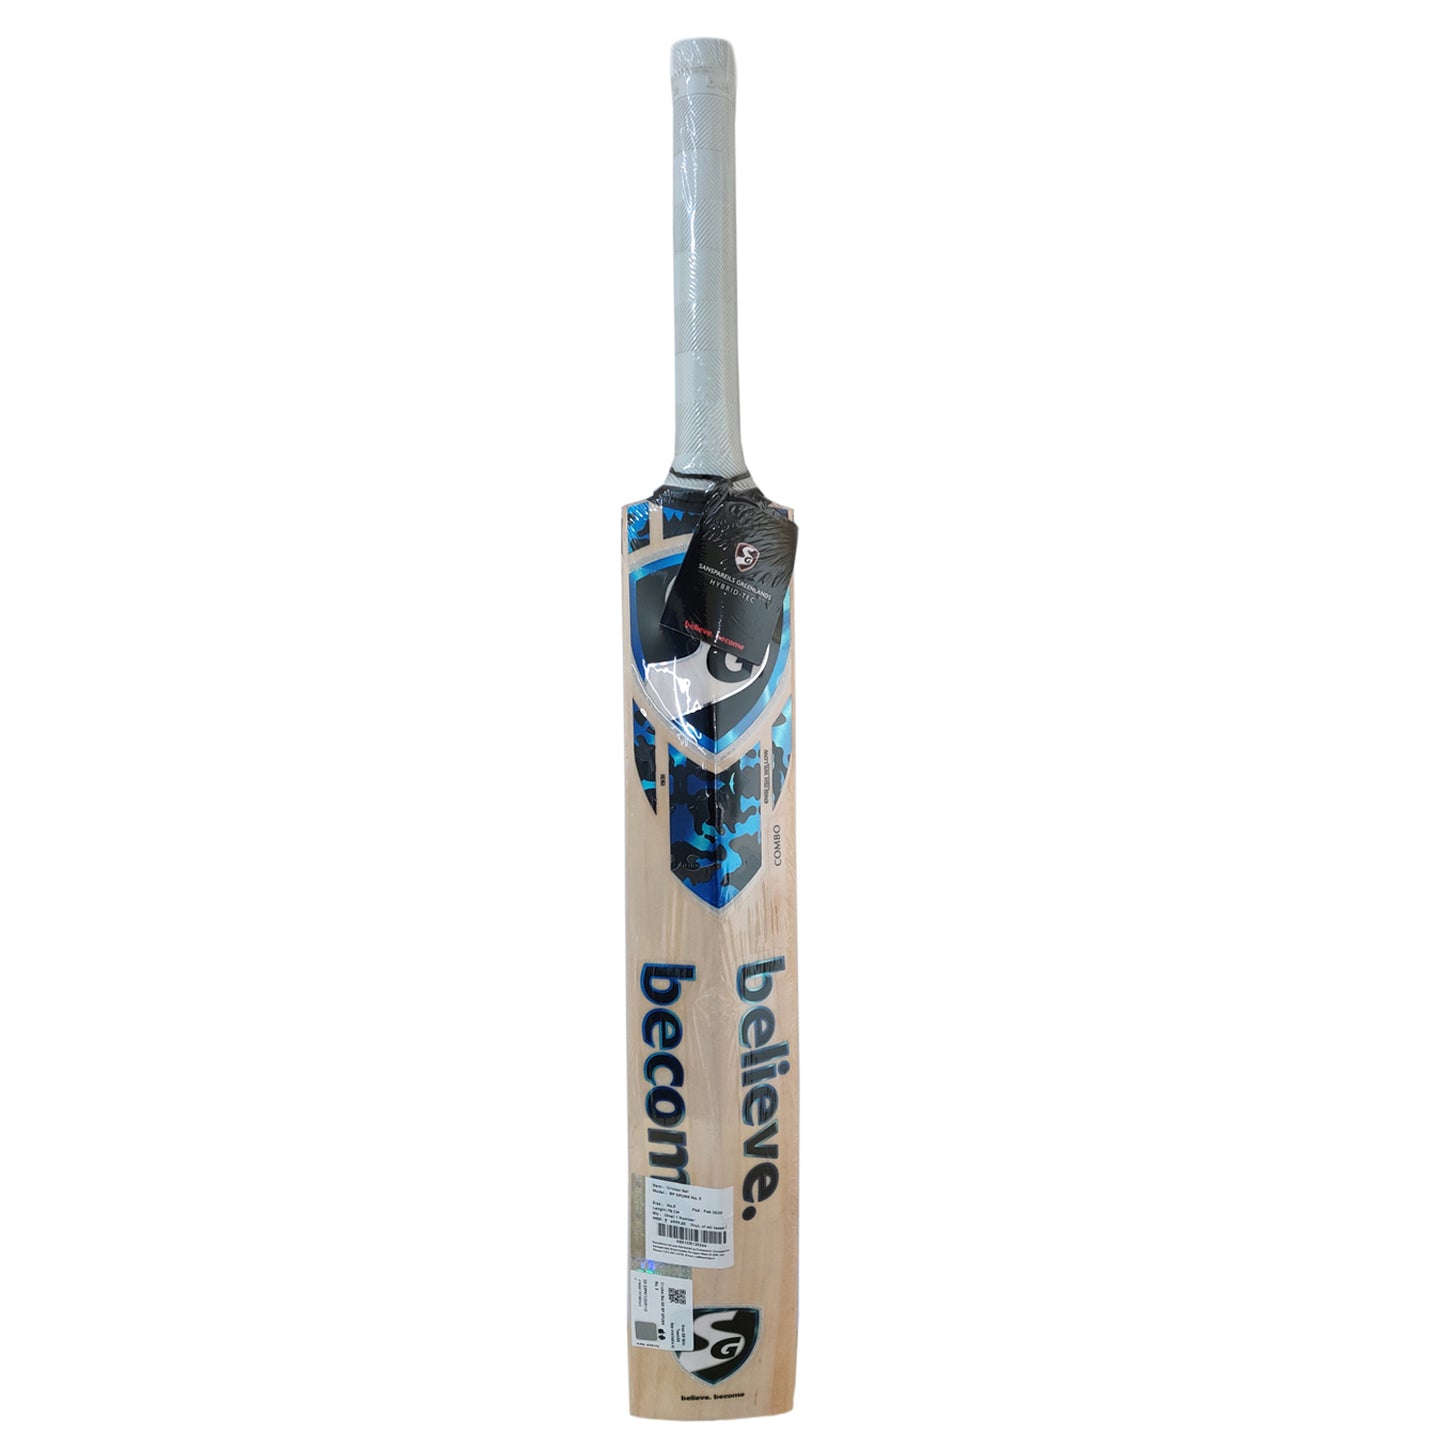 SG RP SPUNK Hybrid-Tec English Willow Cricket Bat - Best Price online Prokicksports.com